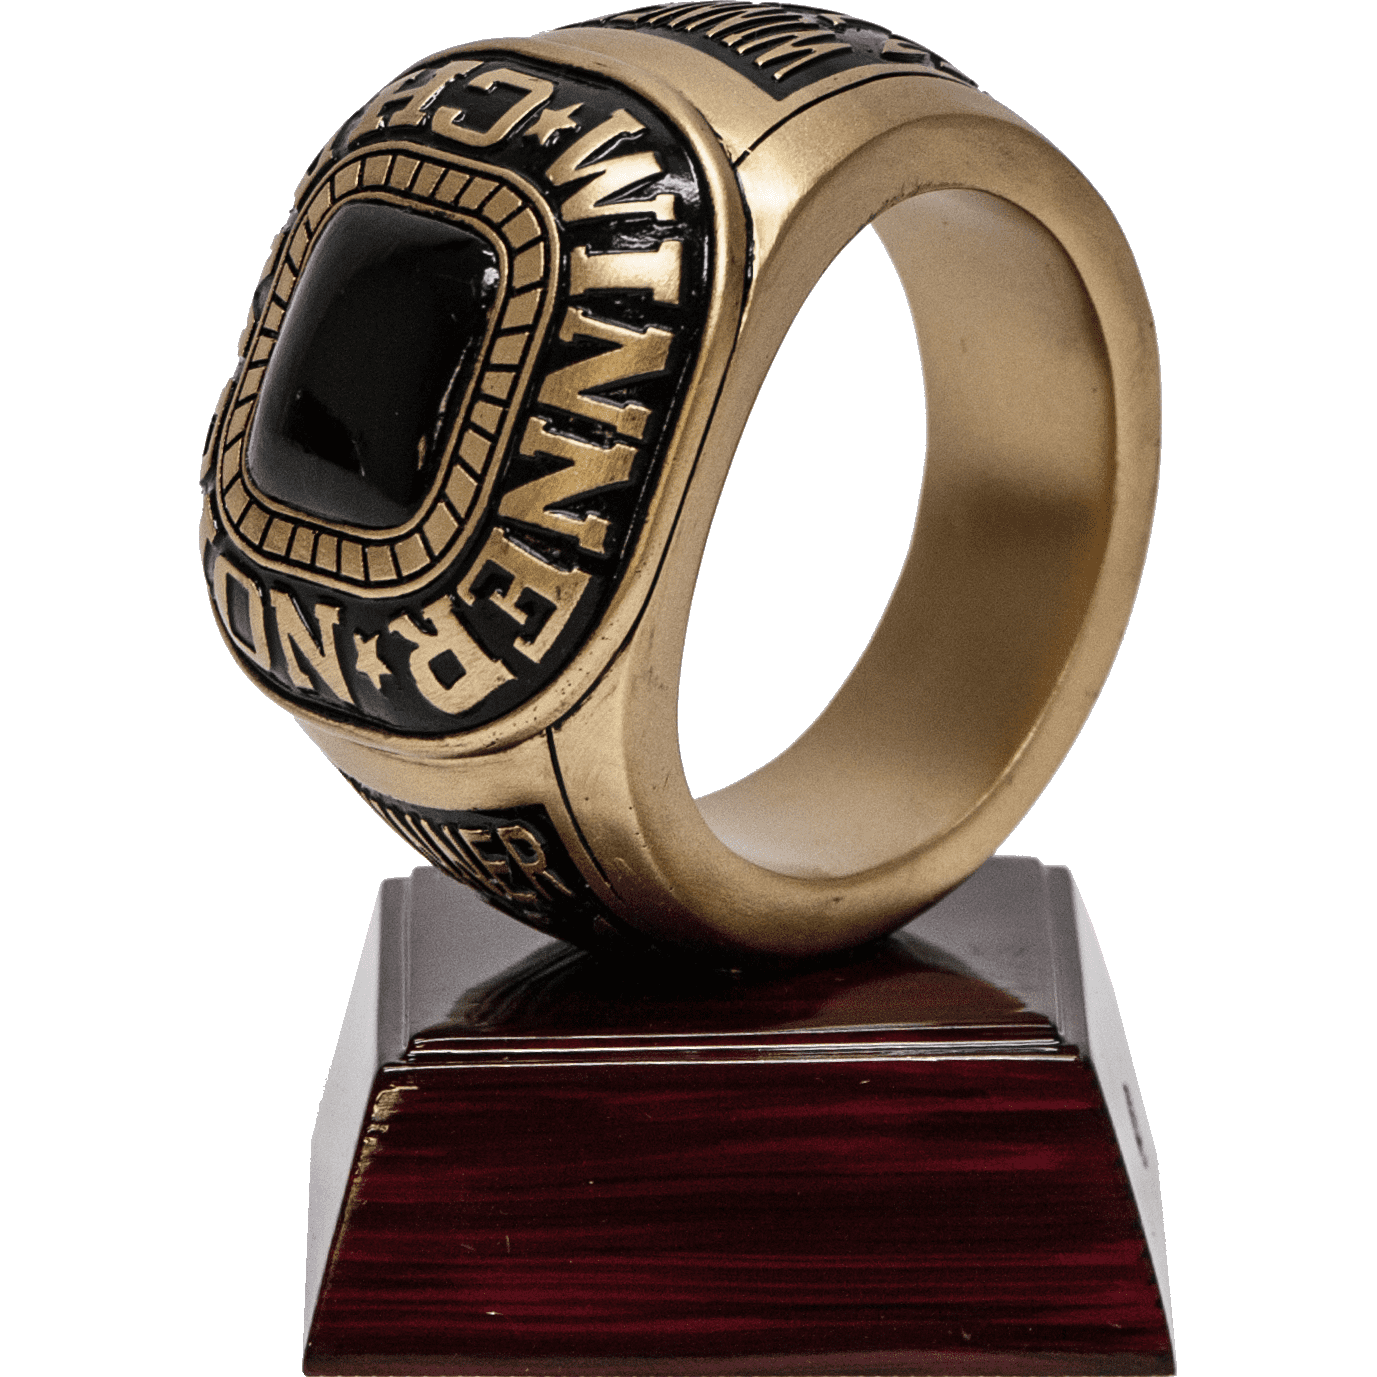 Champion's Ring Award | Alliance Awards LLC.